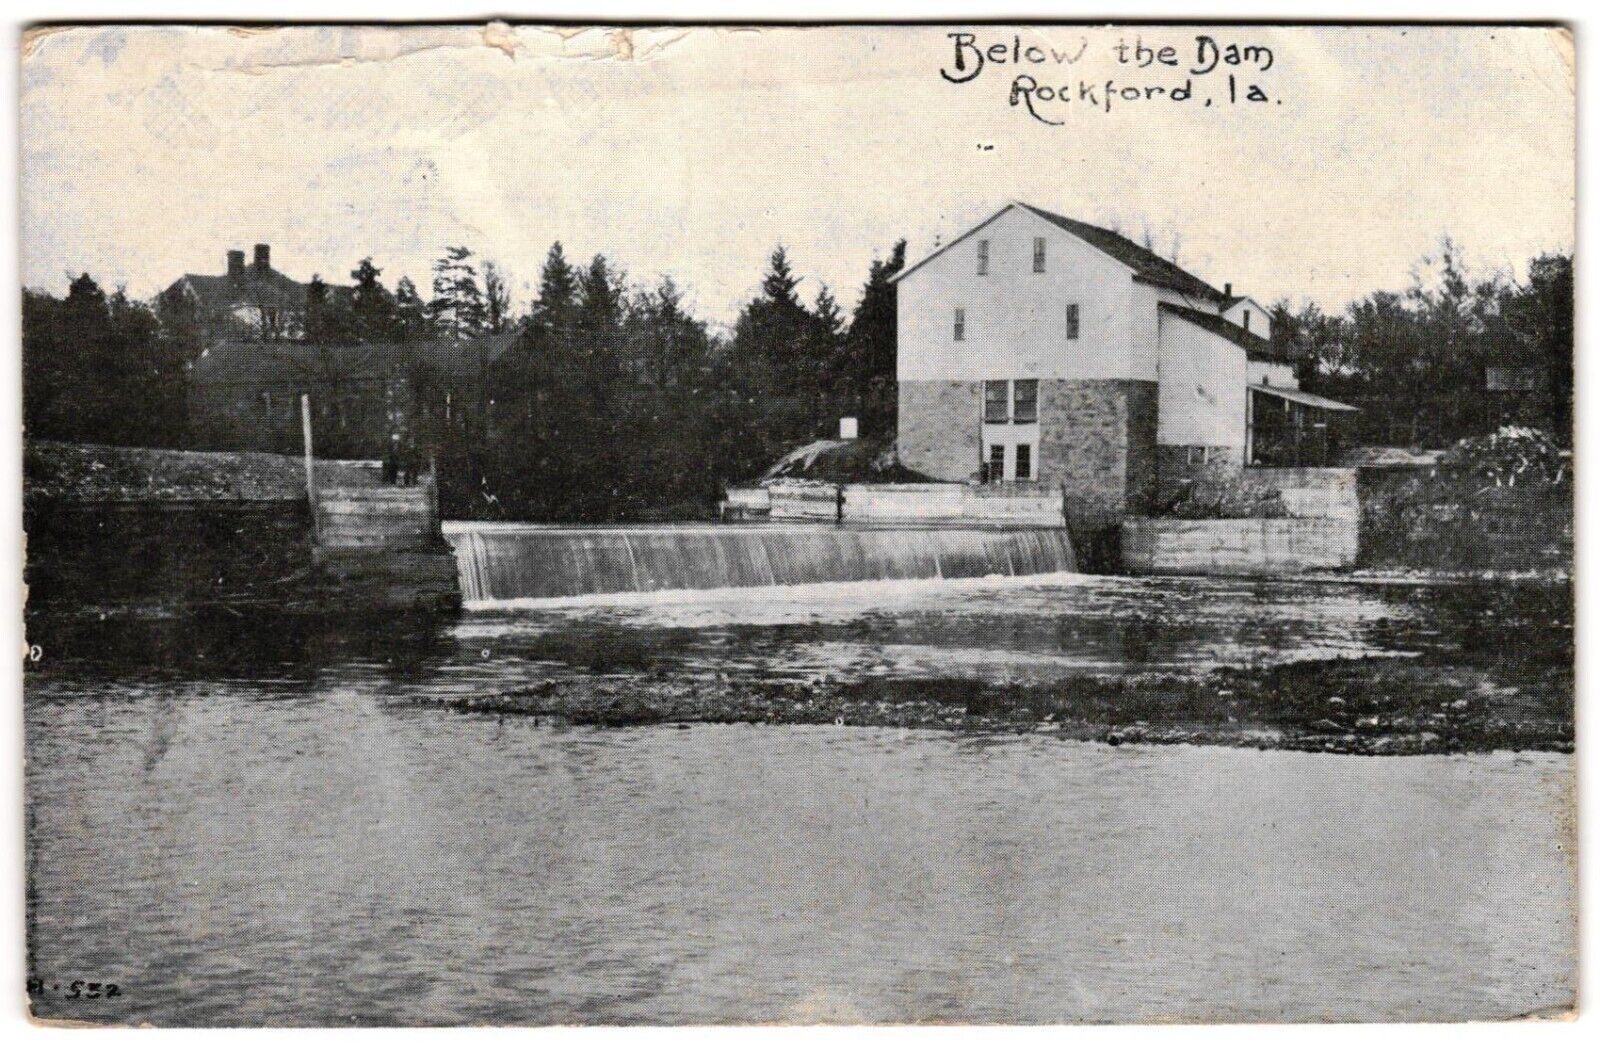 Below the Dam Rockford Iowa IA c1910s Posted Postcard